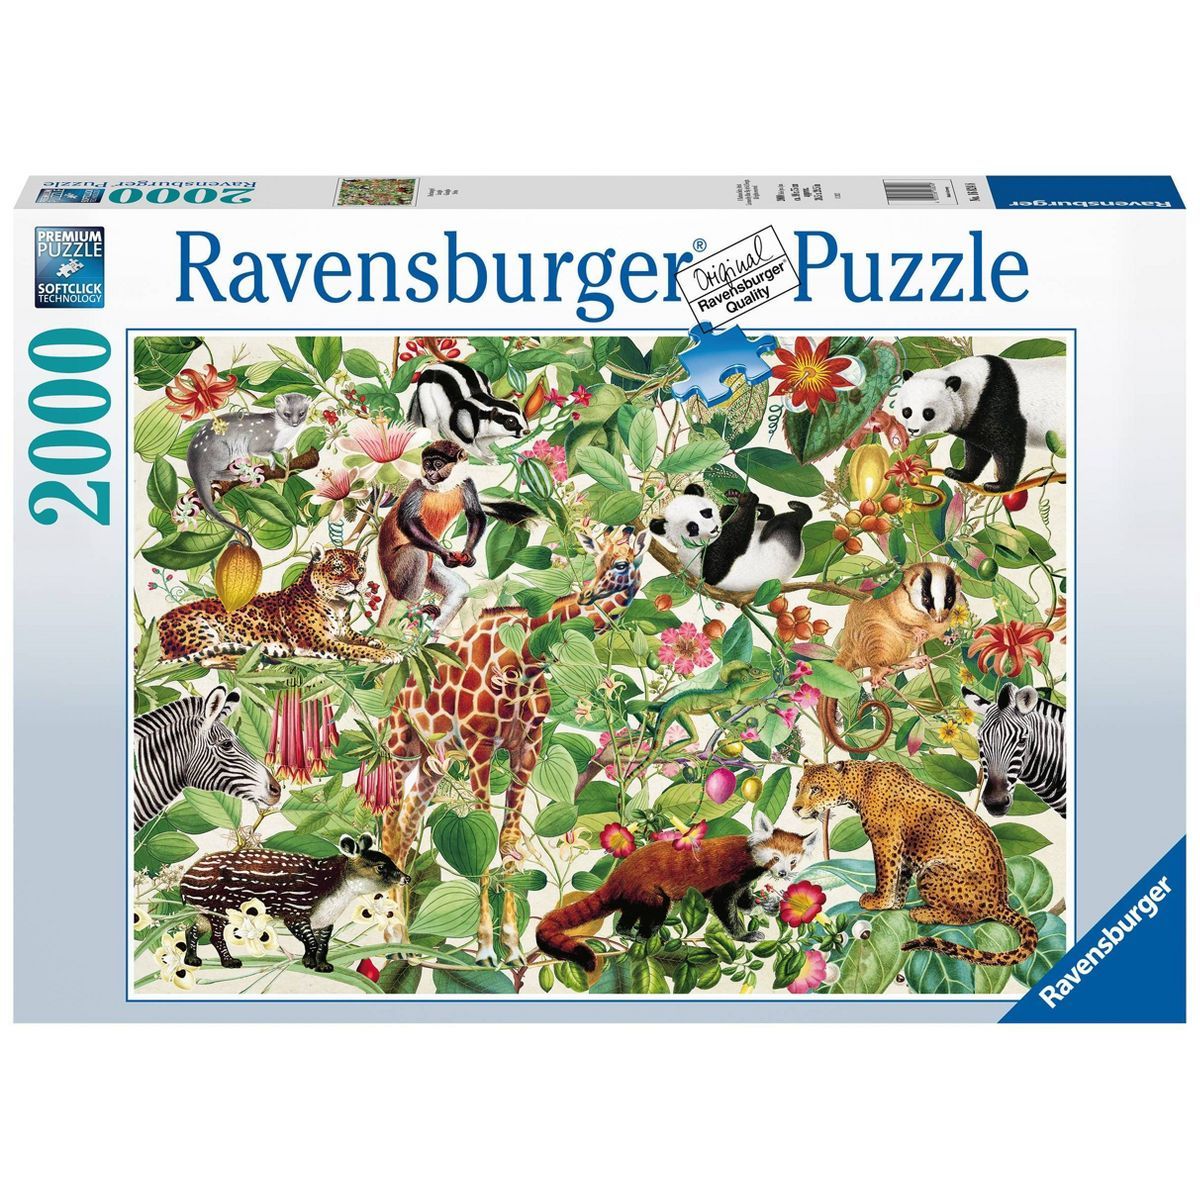 Ravensburger Jungle Jigsaw Puzzle - 2000pc | Target